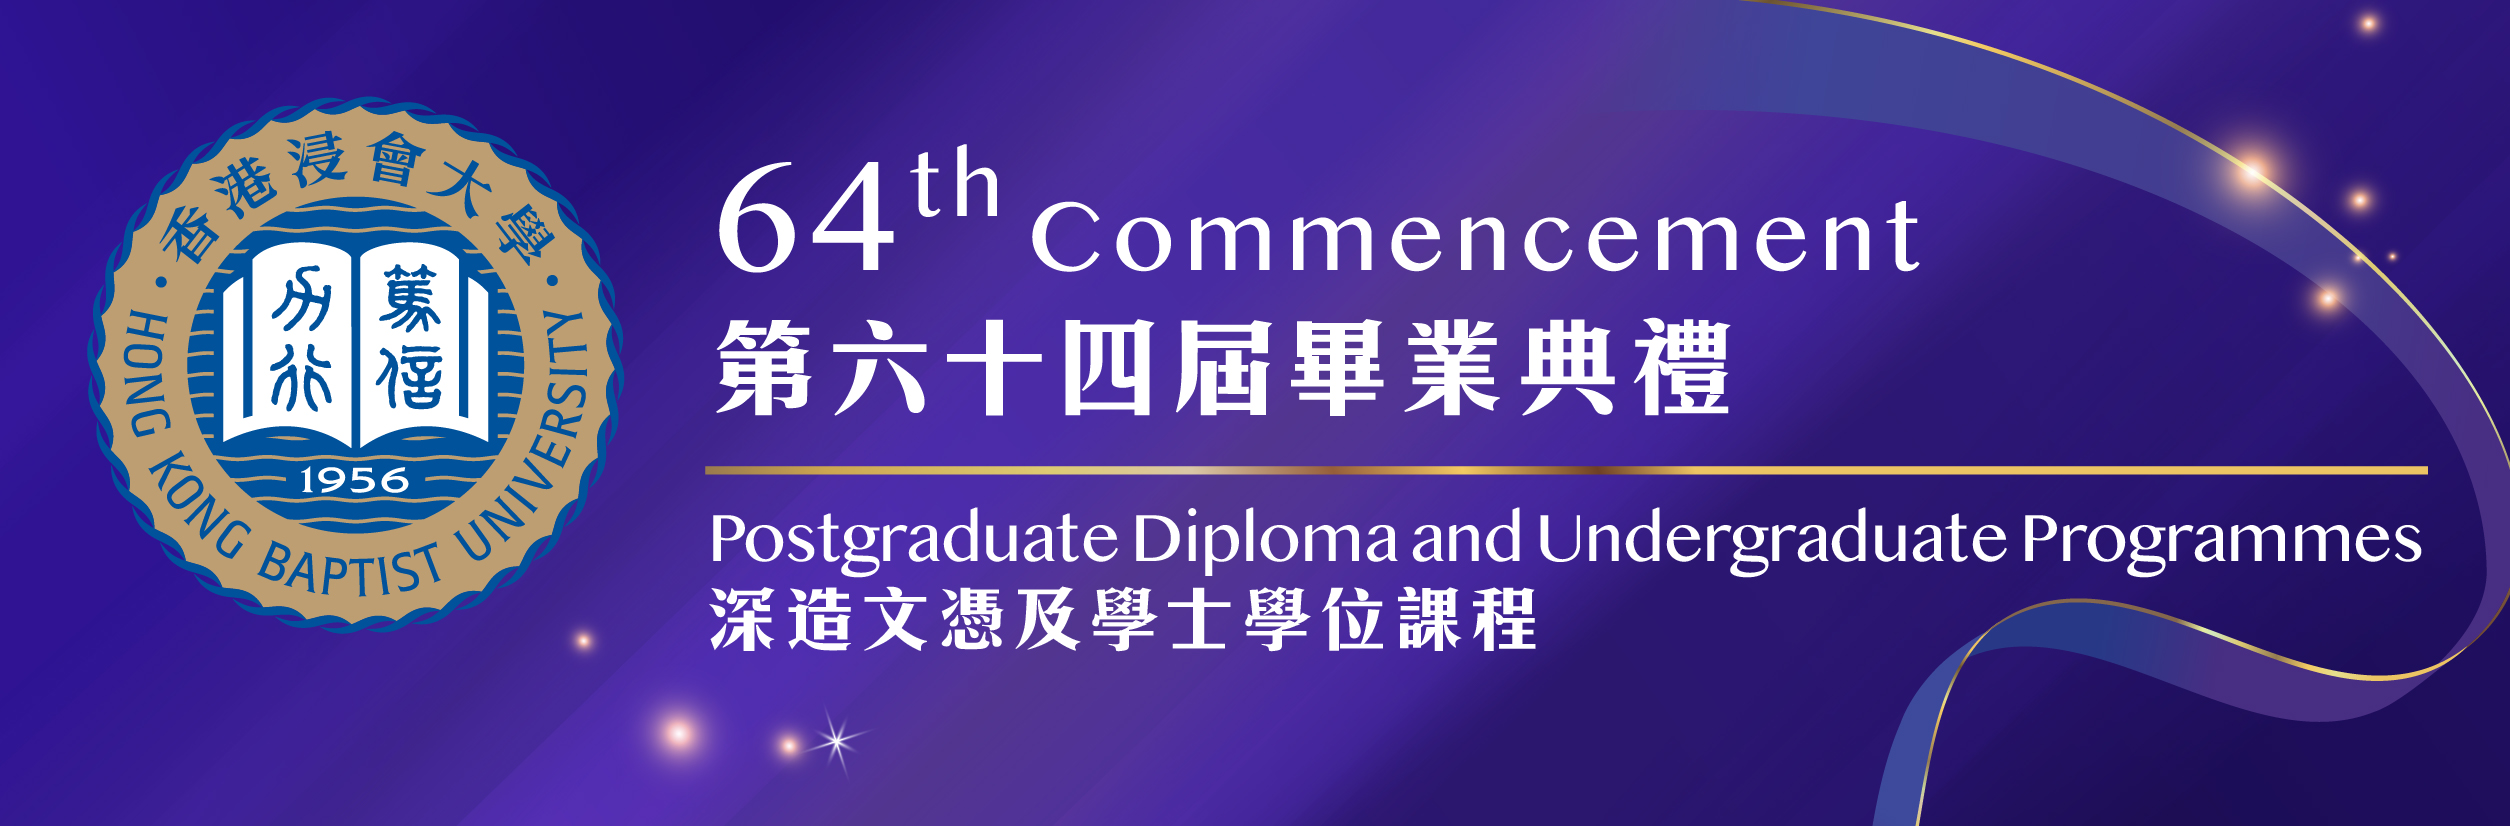 HKBU 64th Commencement – Postgraduate Diploma and Undergraduate Programmes